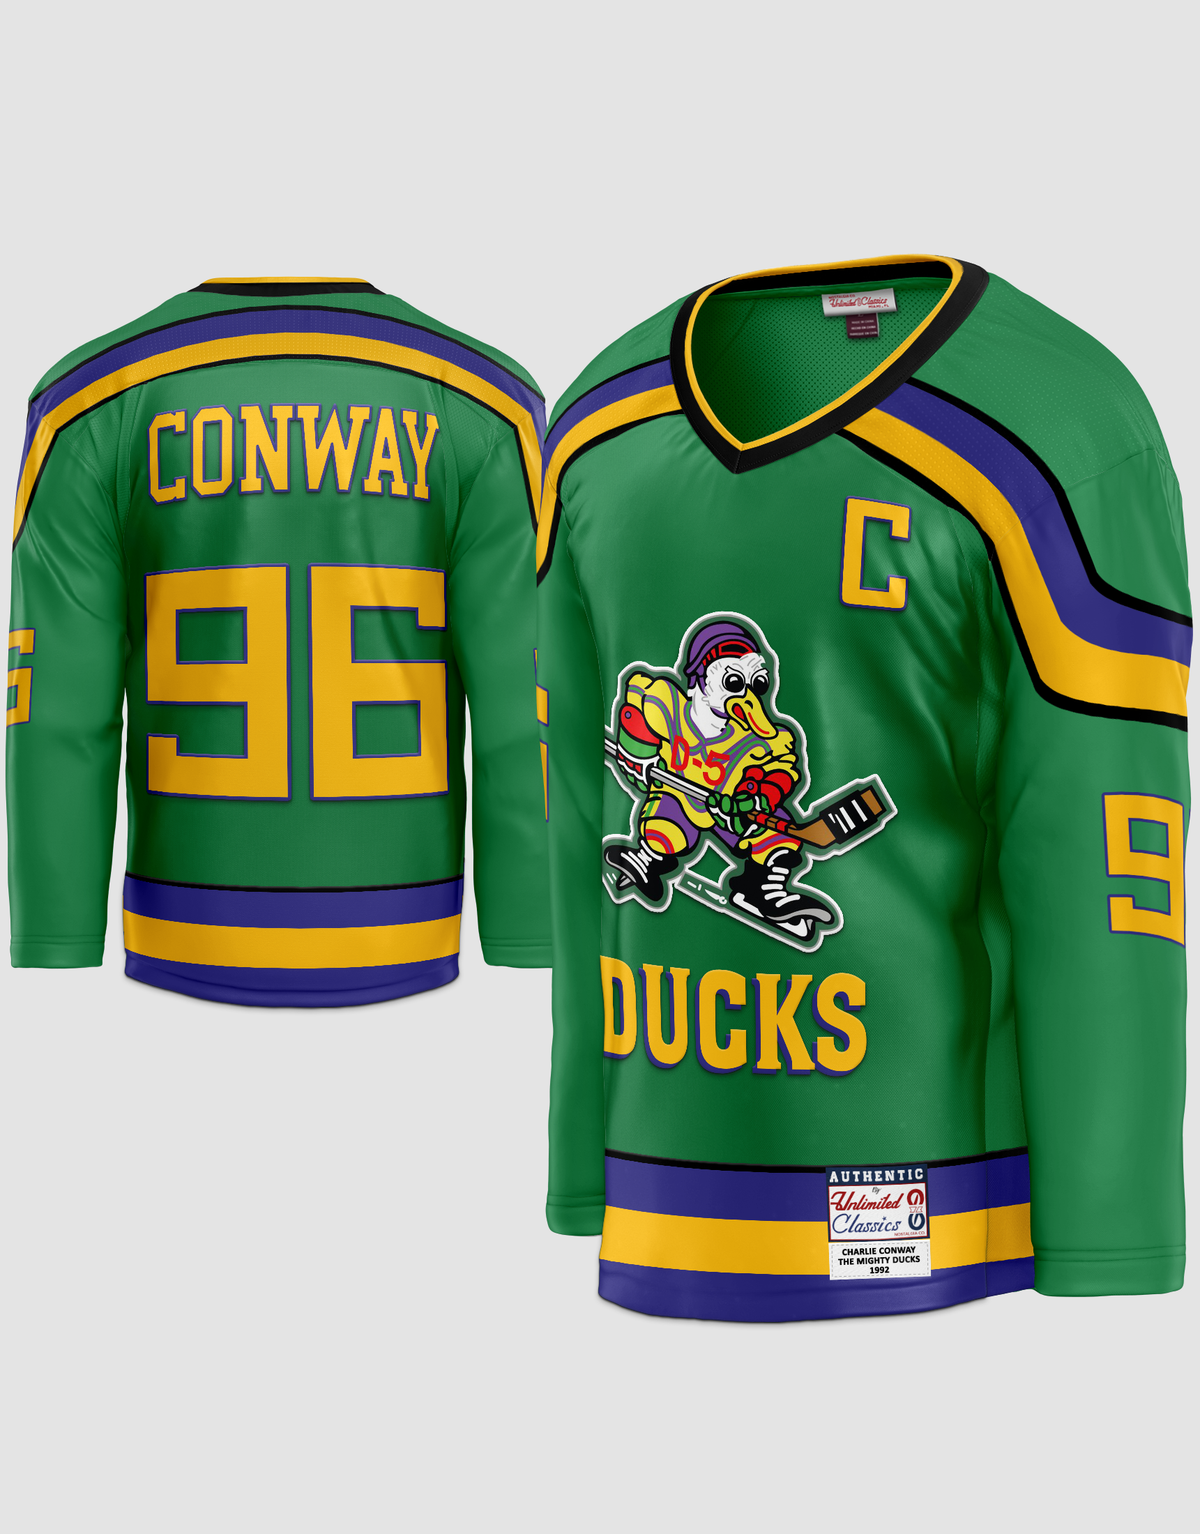 Charlie Conway #96 Mighty Ducks Green Hockey Jersey